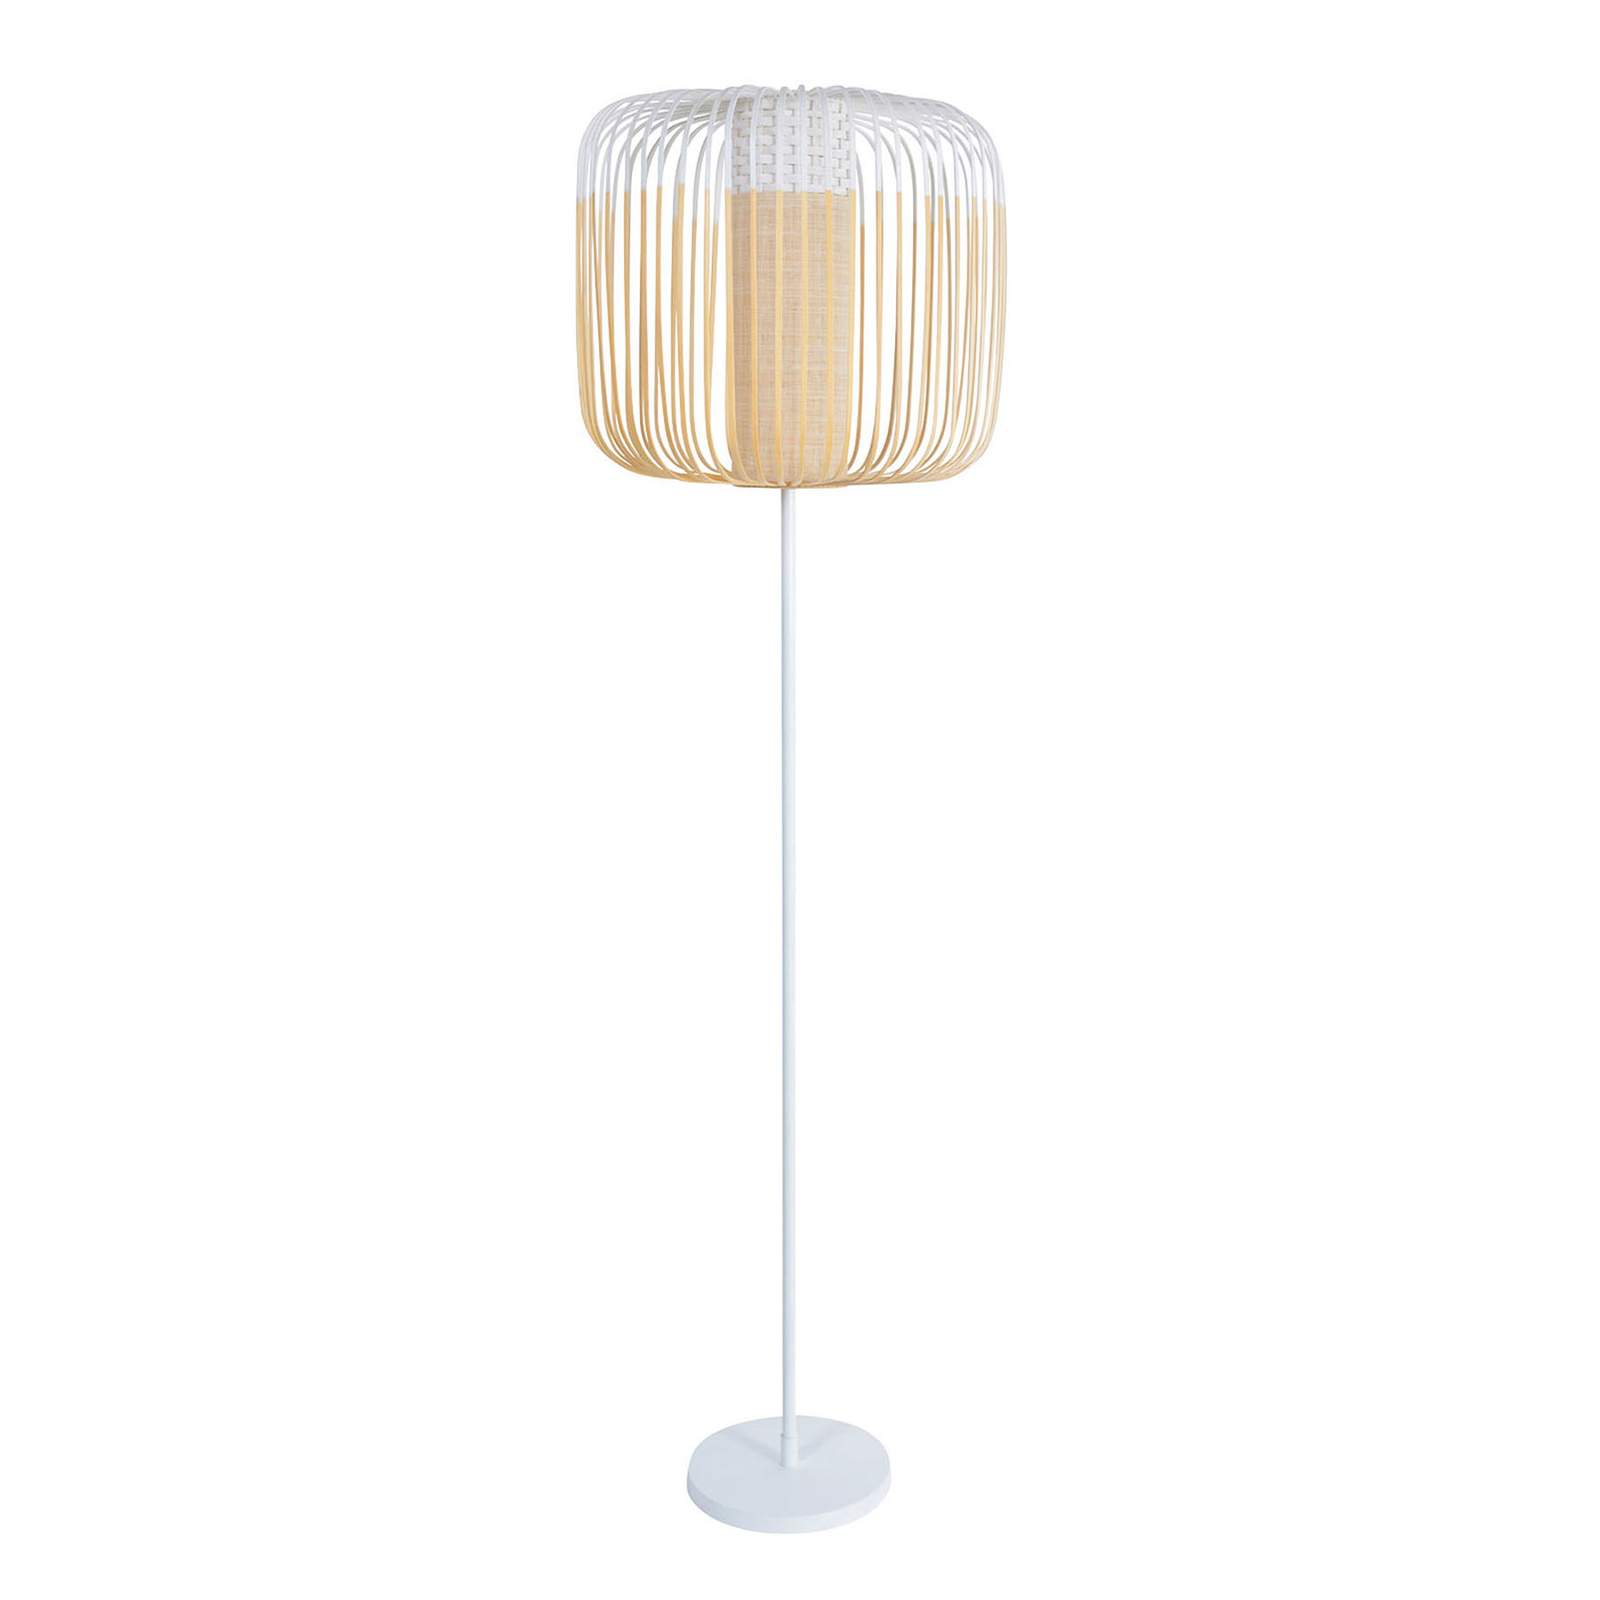 Forestier Bamboo Light lampadaire à 1 lampe blanc